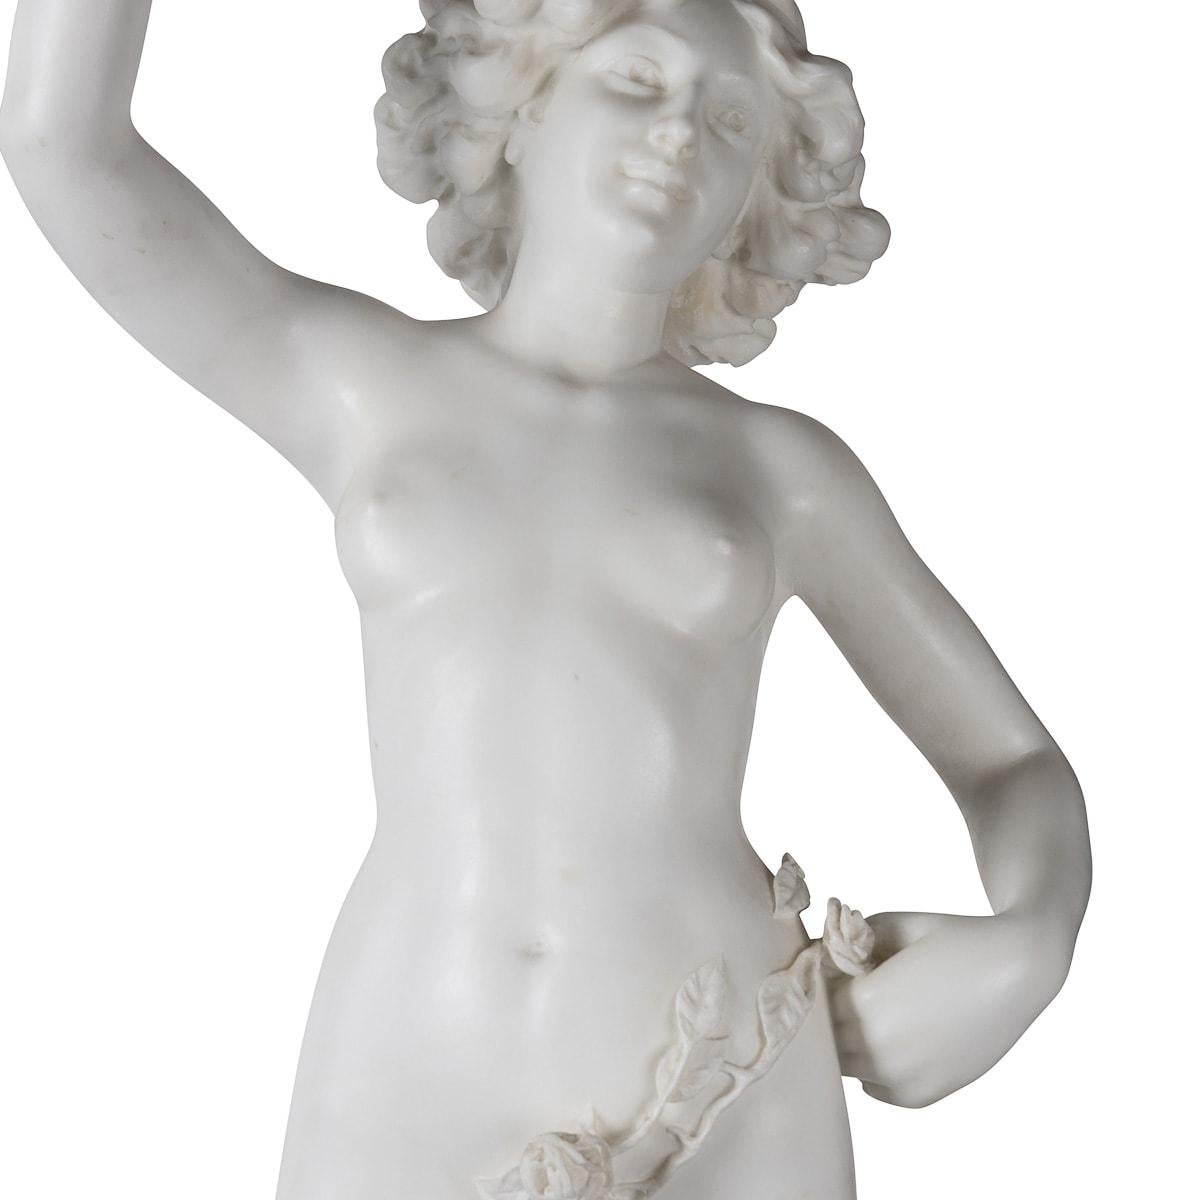 Marbre Figure d'un nu, Adolfo Cipriani (1880-1930), Italie, marbre du 19e siècle en vente